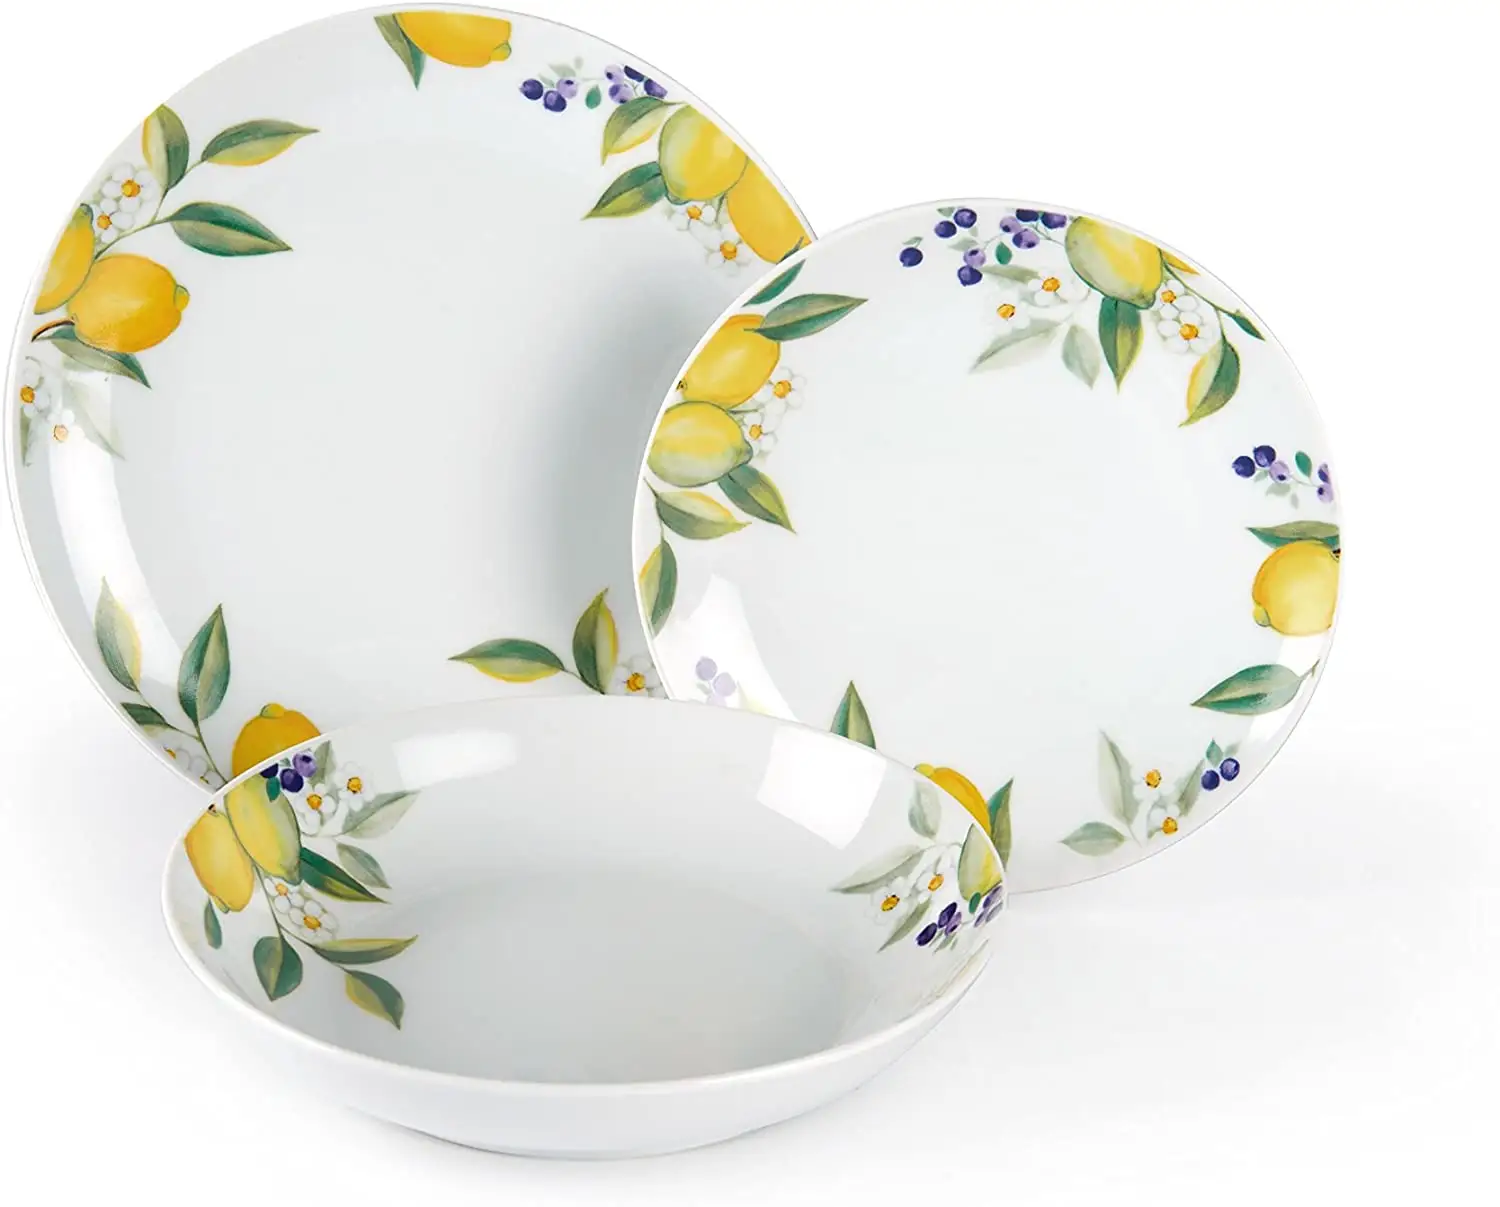 Lemon dinner plates ceramic fine china dinnerware